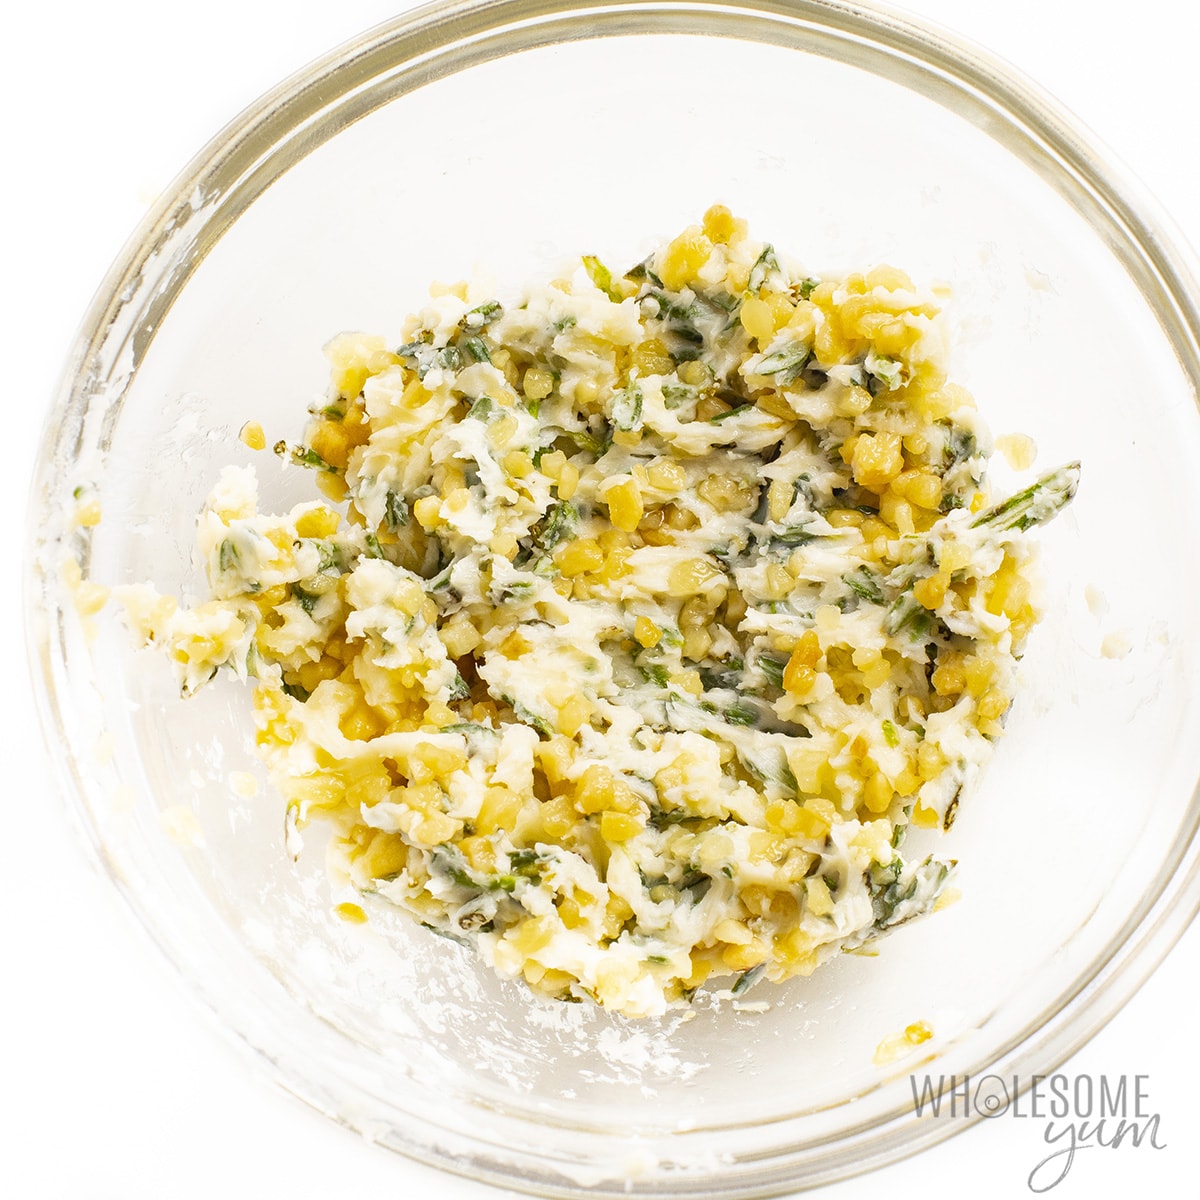 Garlic herb butter in a bowl.